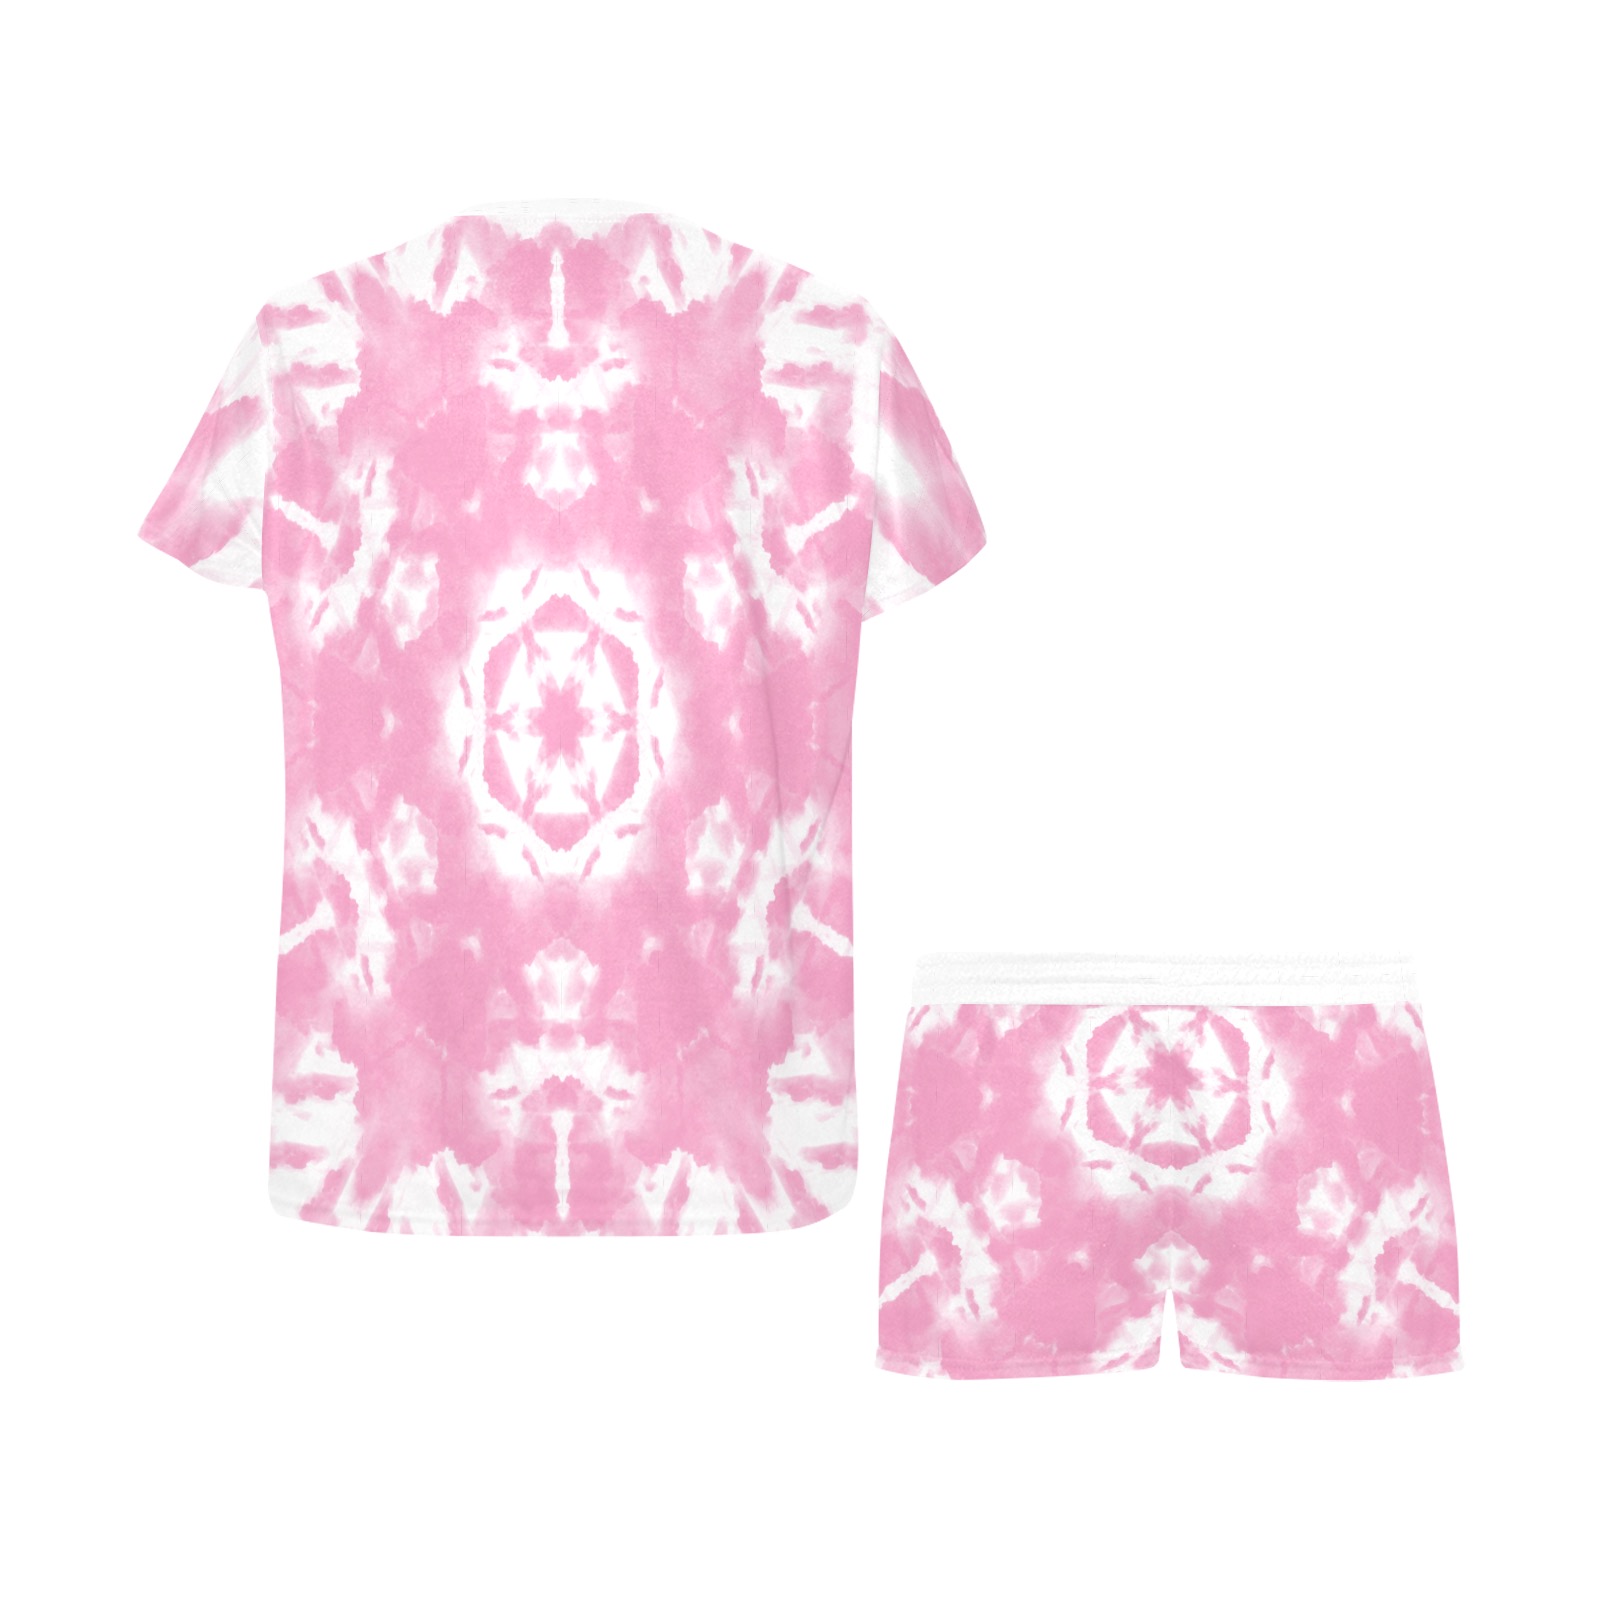 Ô Pink Tie Dye on White Women's Short Pajama Set